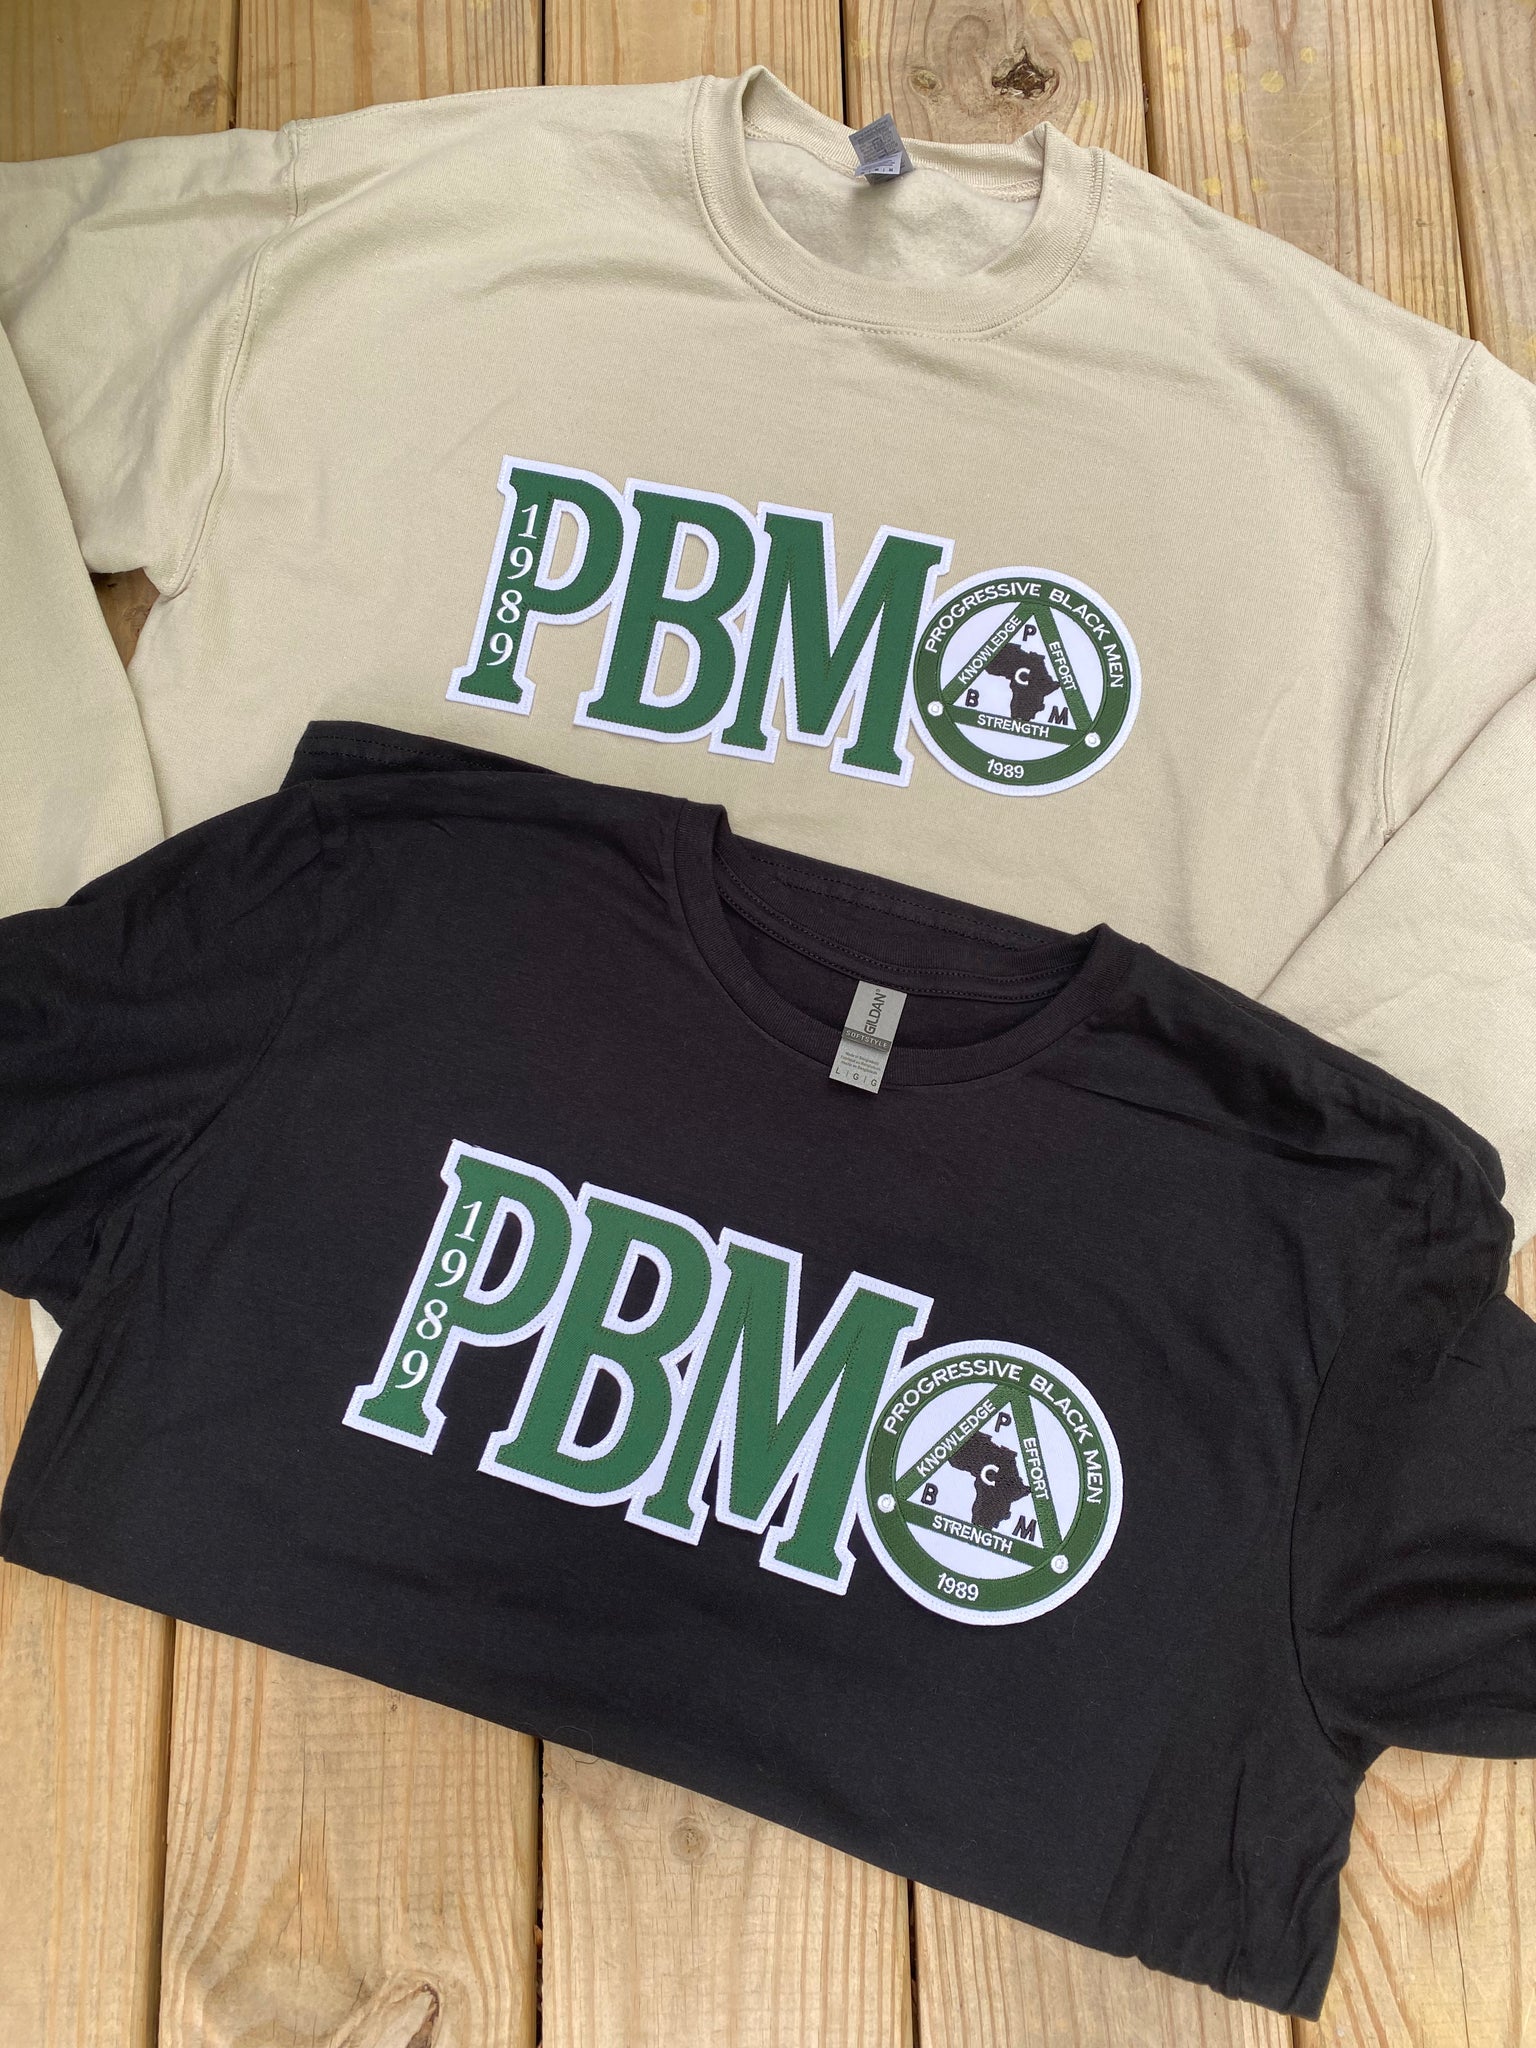 PBM Crest - Stitch Founding Date Apparel